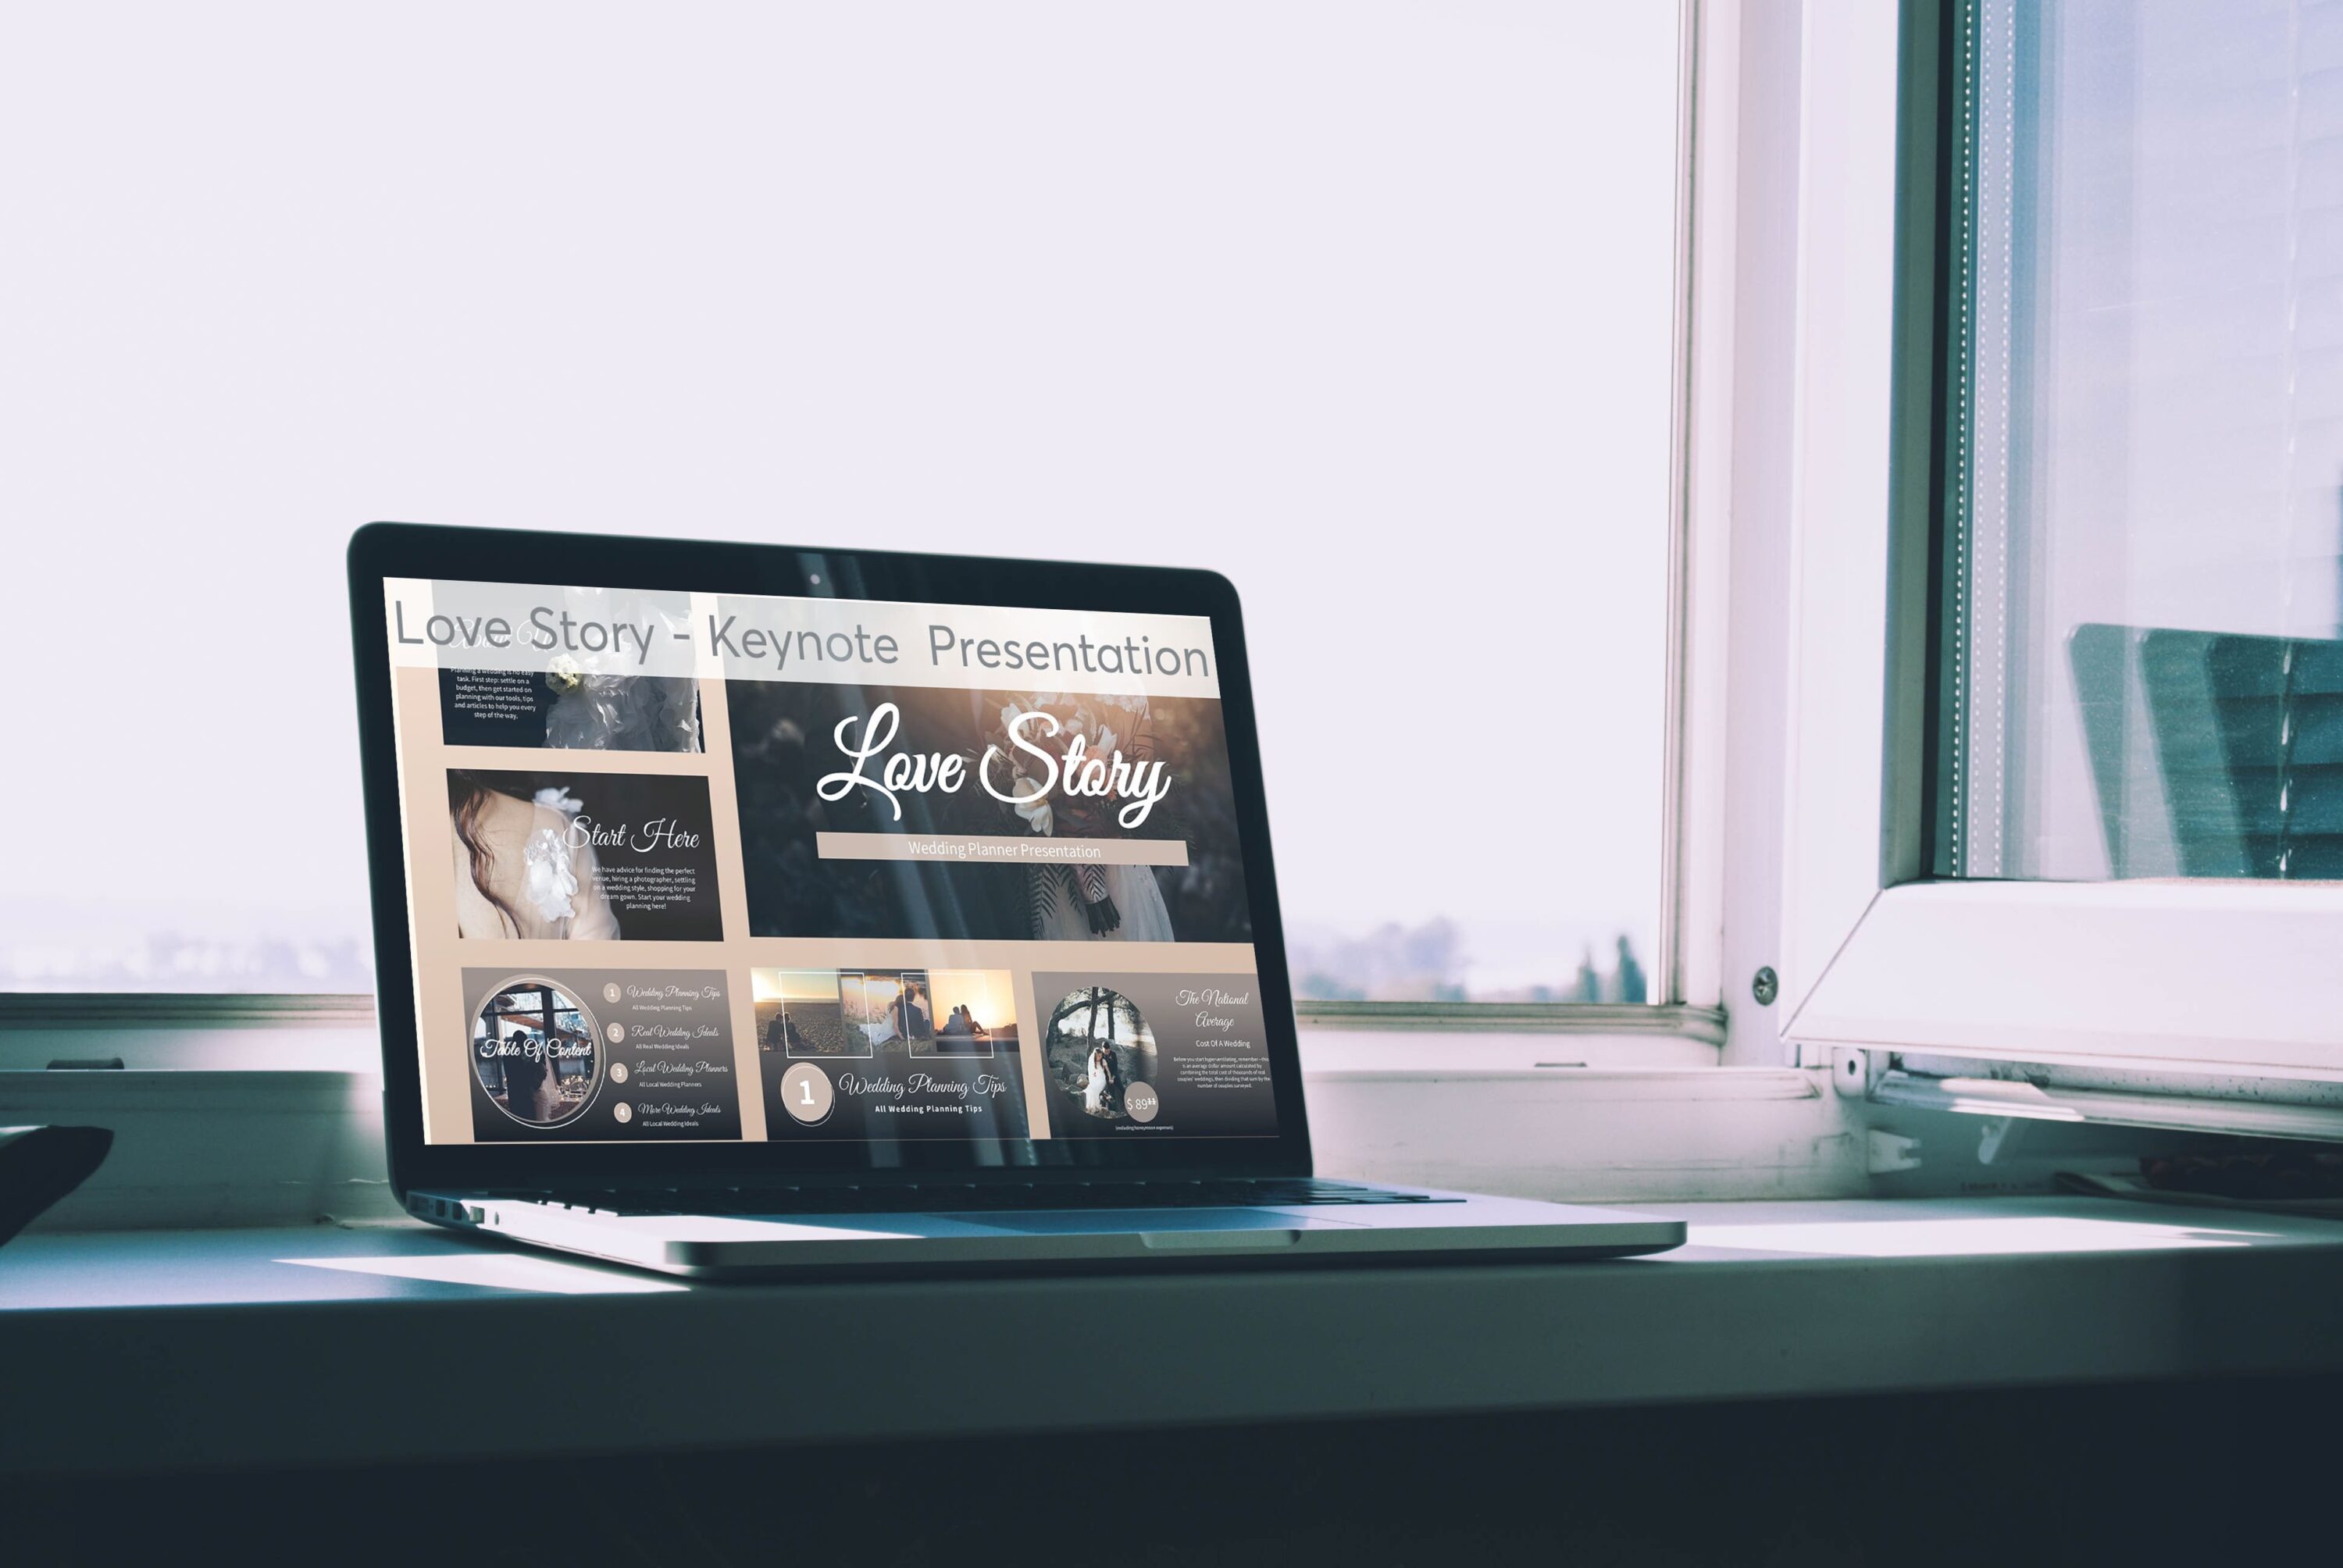 Love Story - Keynote Presentation - laptop.